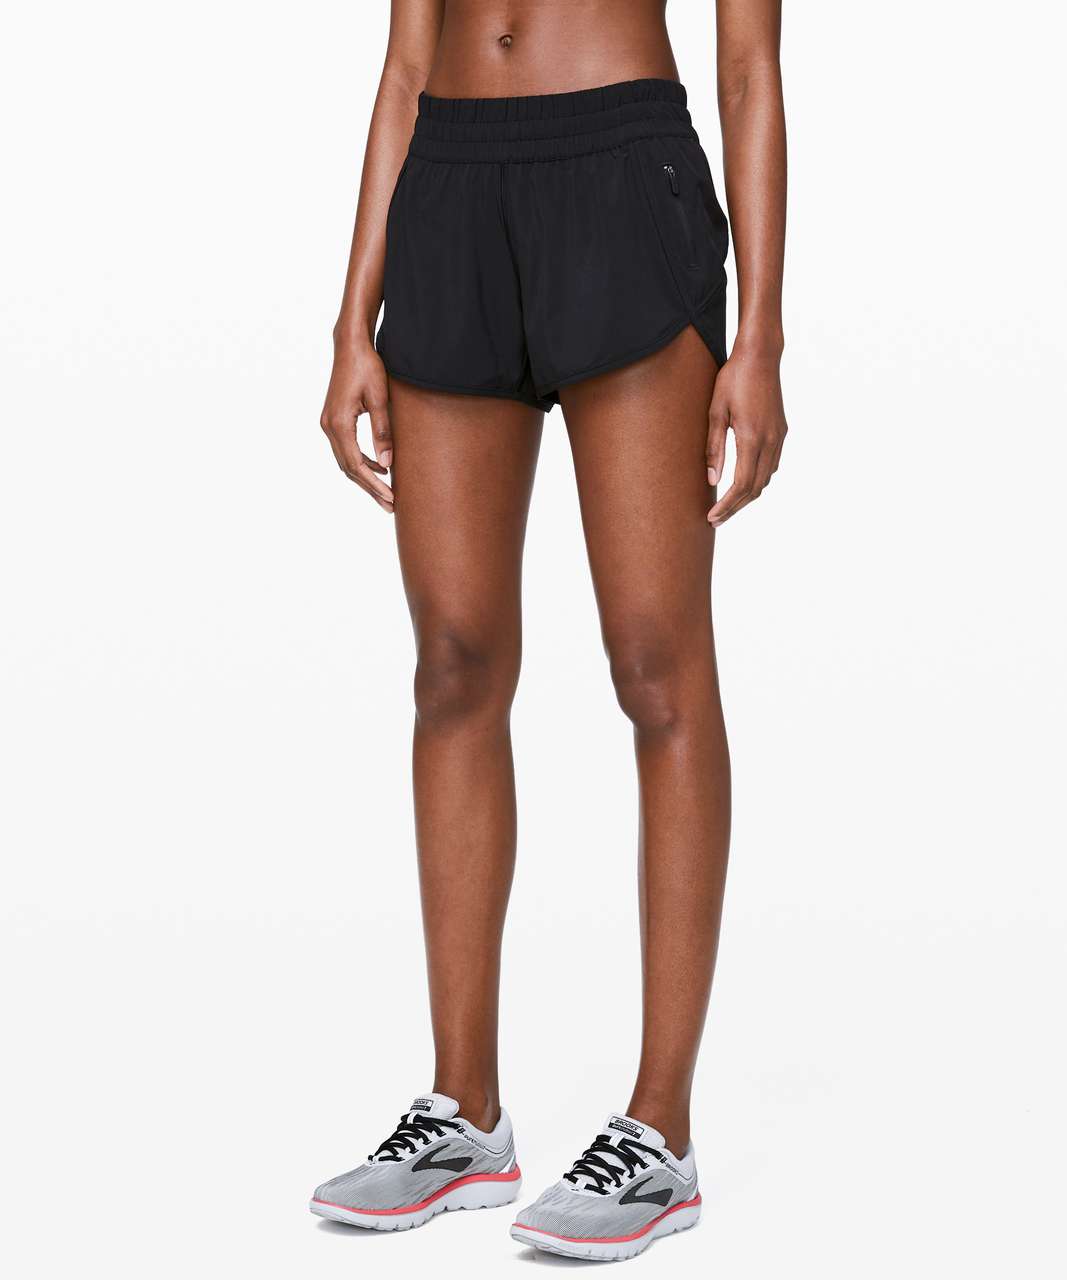 Lululemon athletica Tracker Low-Rise Lined Short 4, Women's Shorts